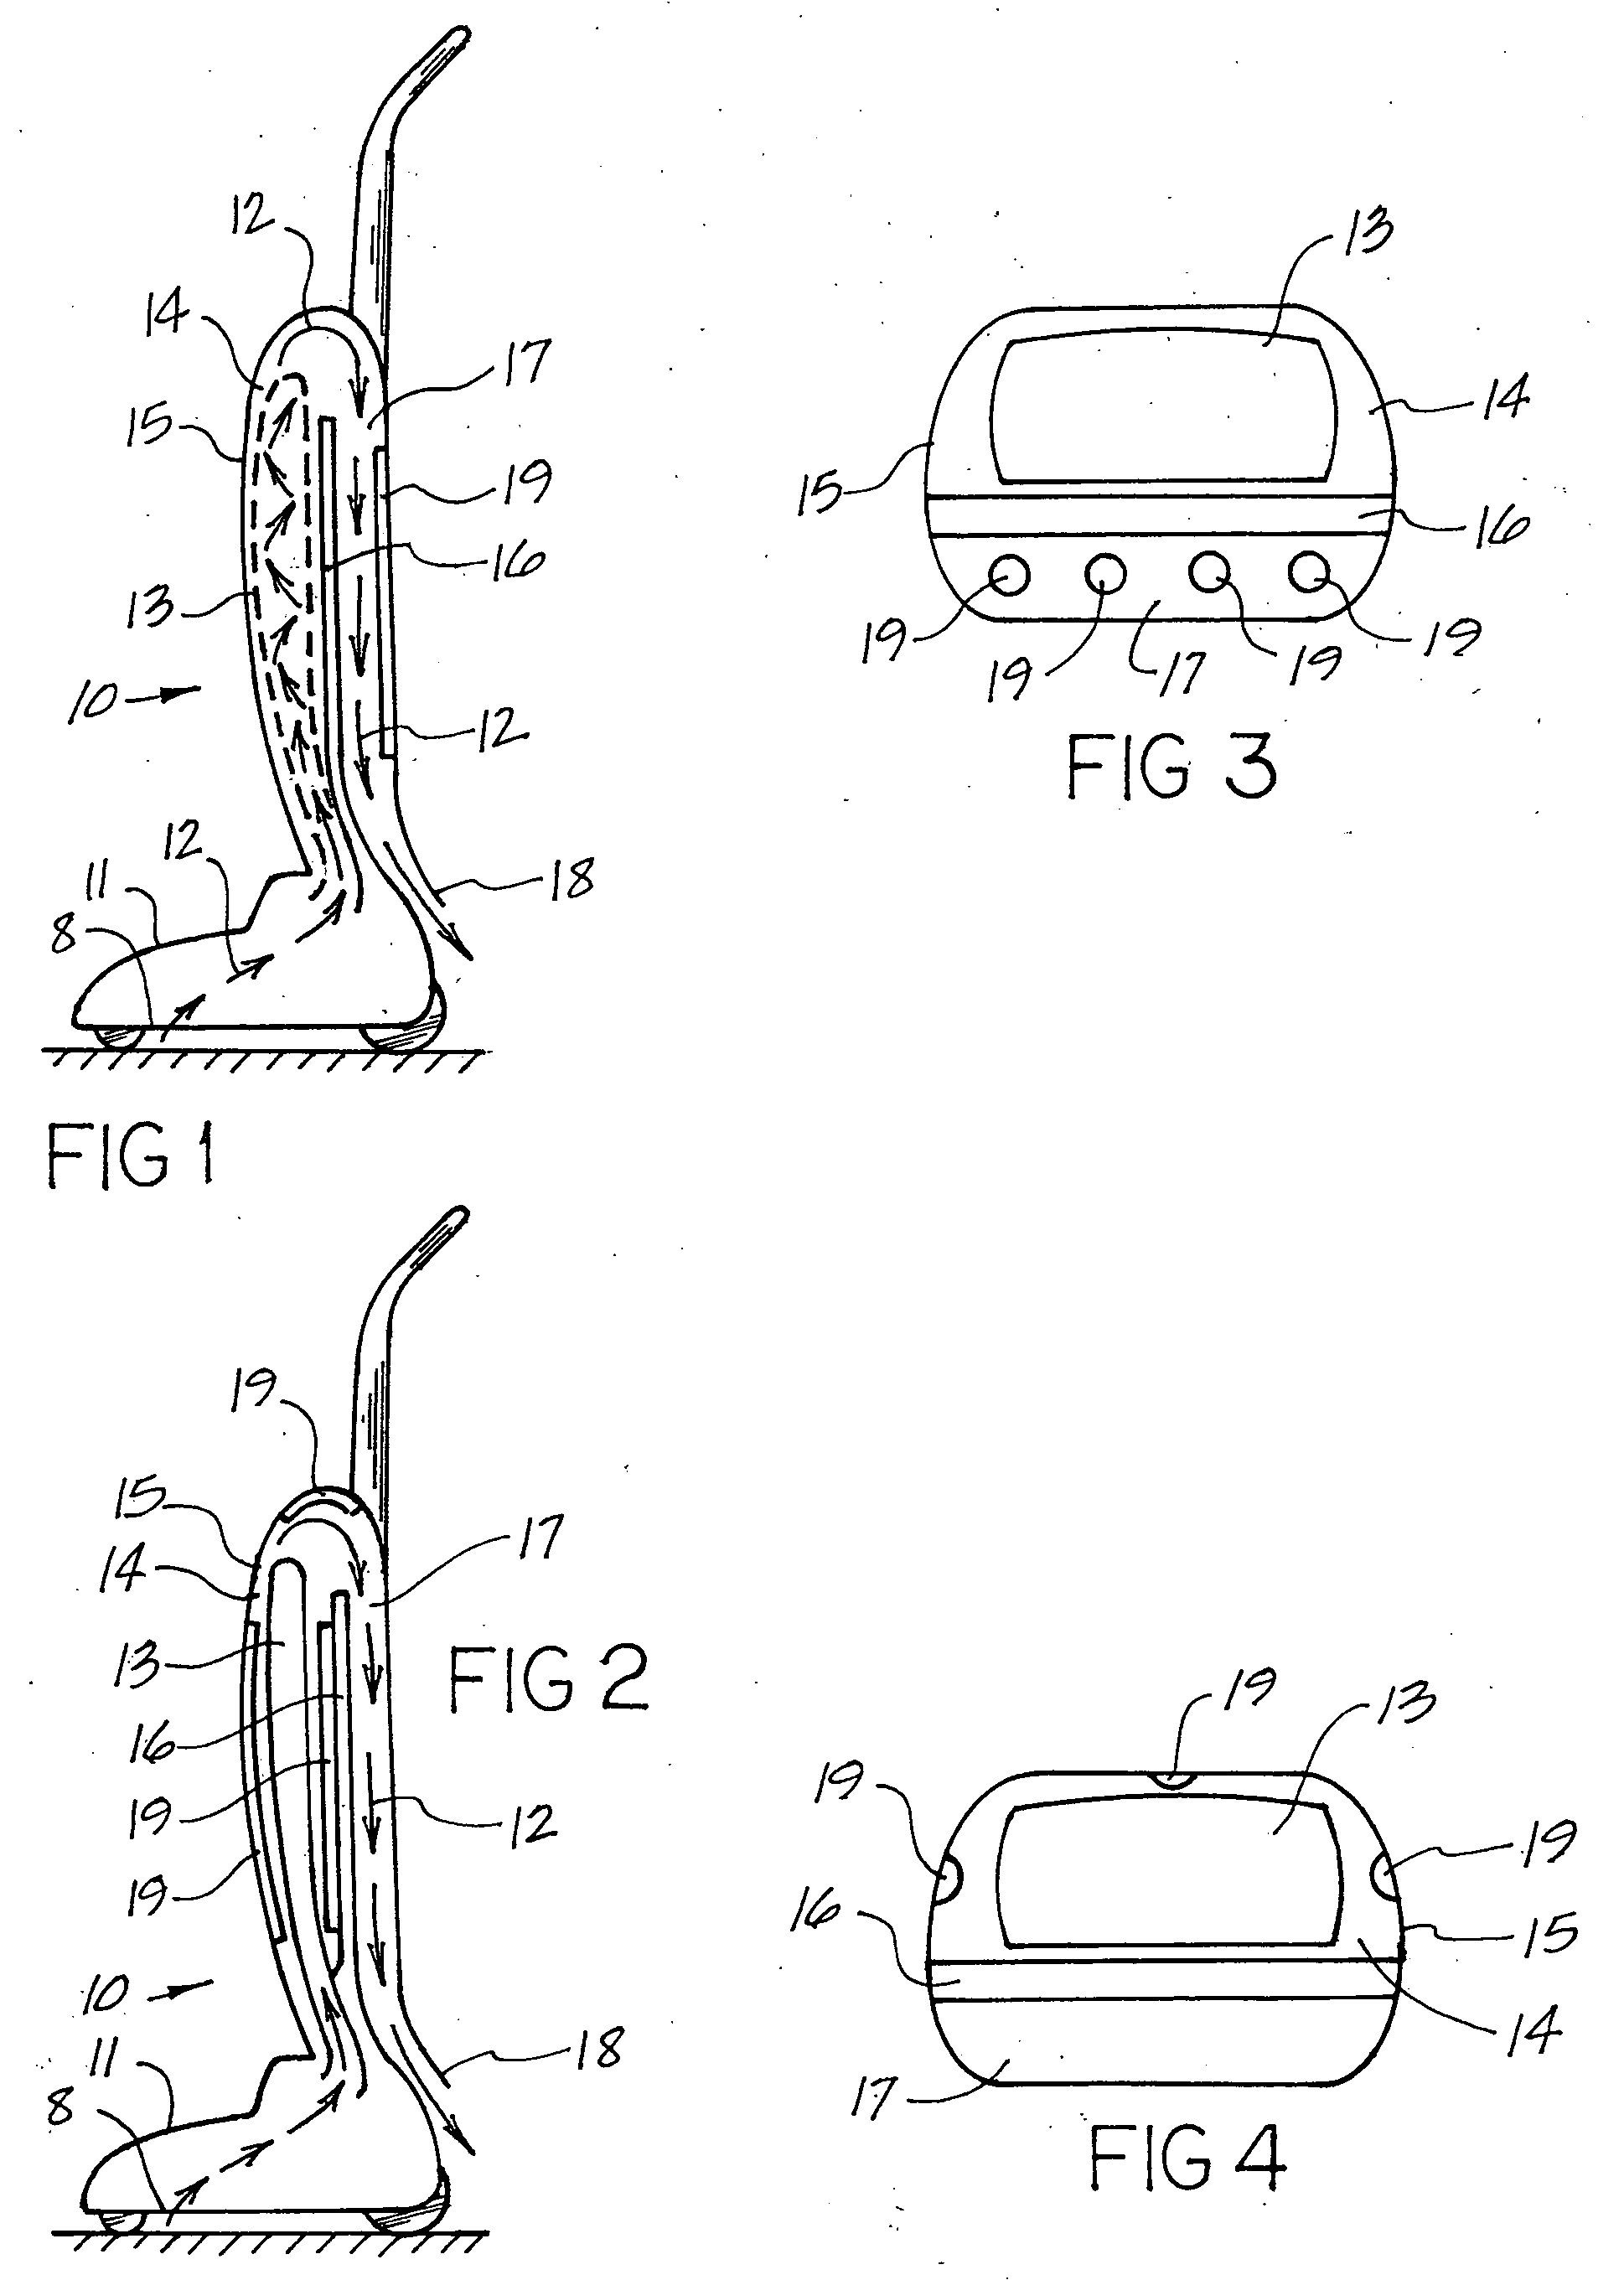 Vacuum apparatus and method using ultraviolet radiation for sanitization